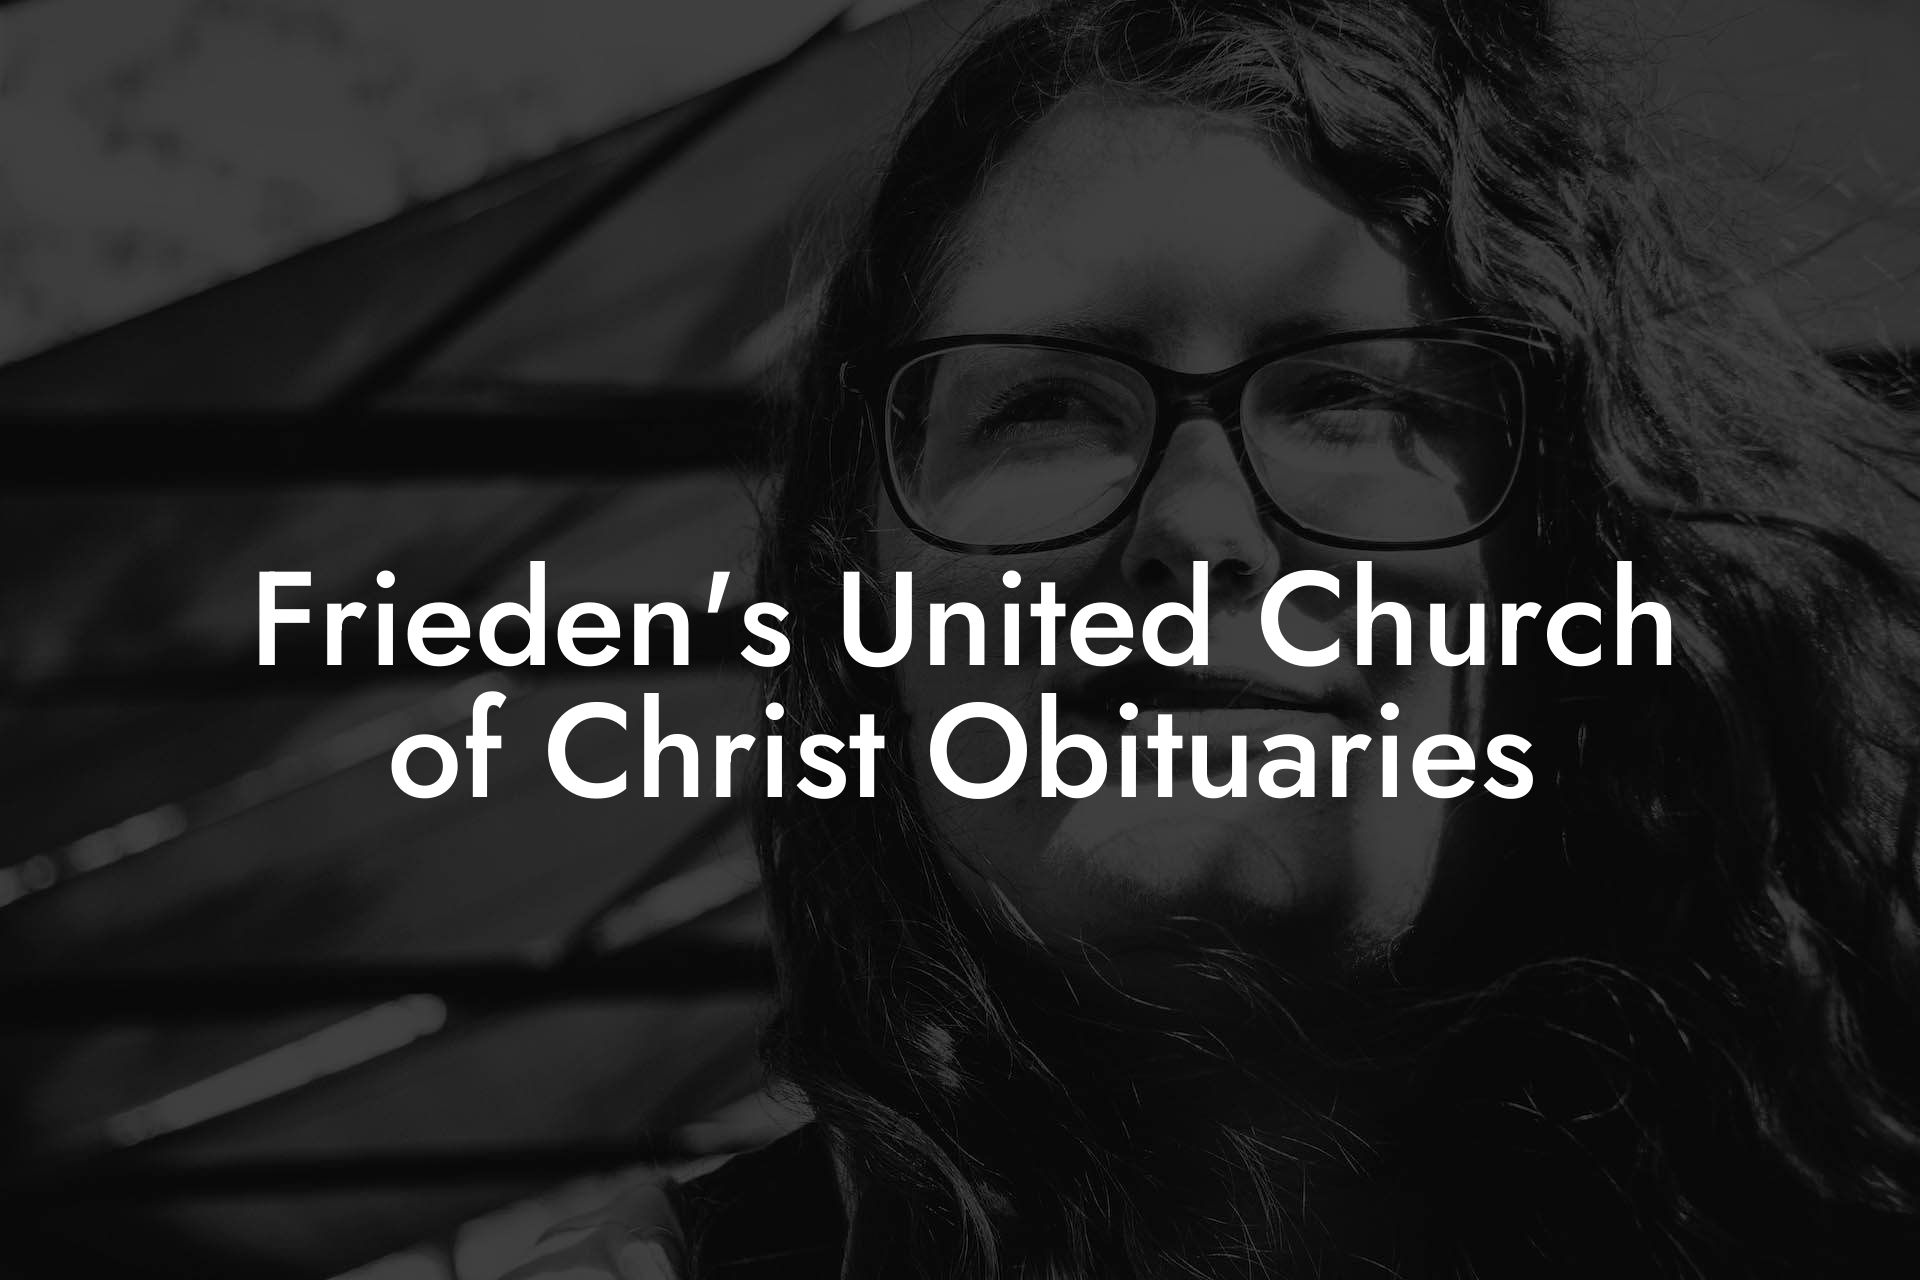 Frieden's United Church of Christ Obituaries